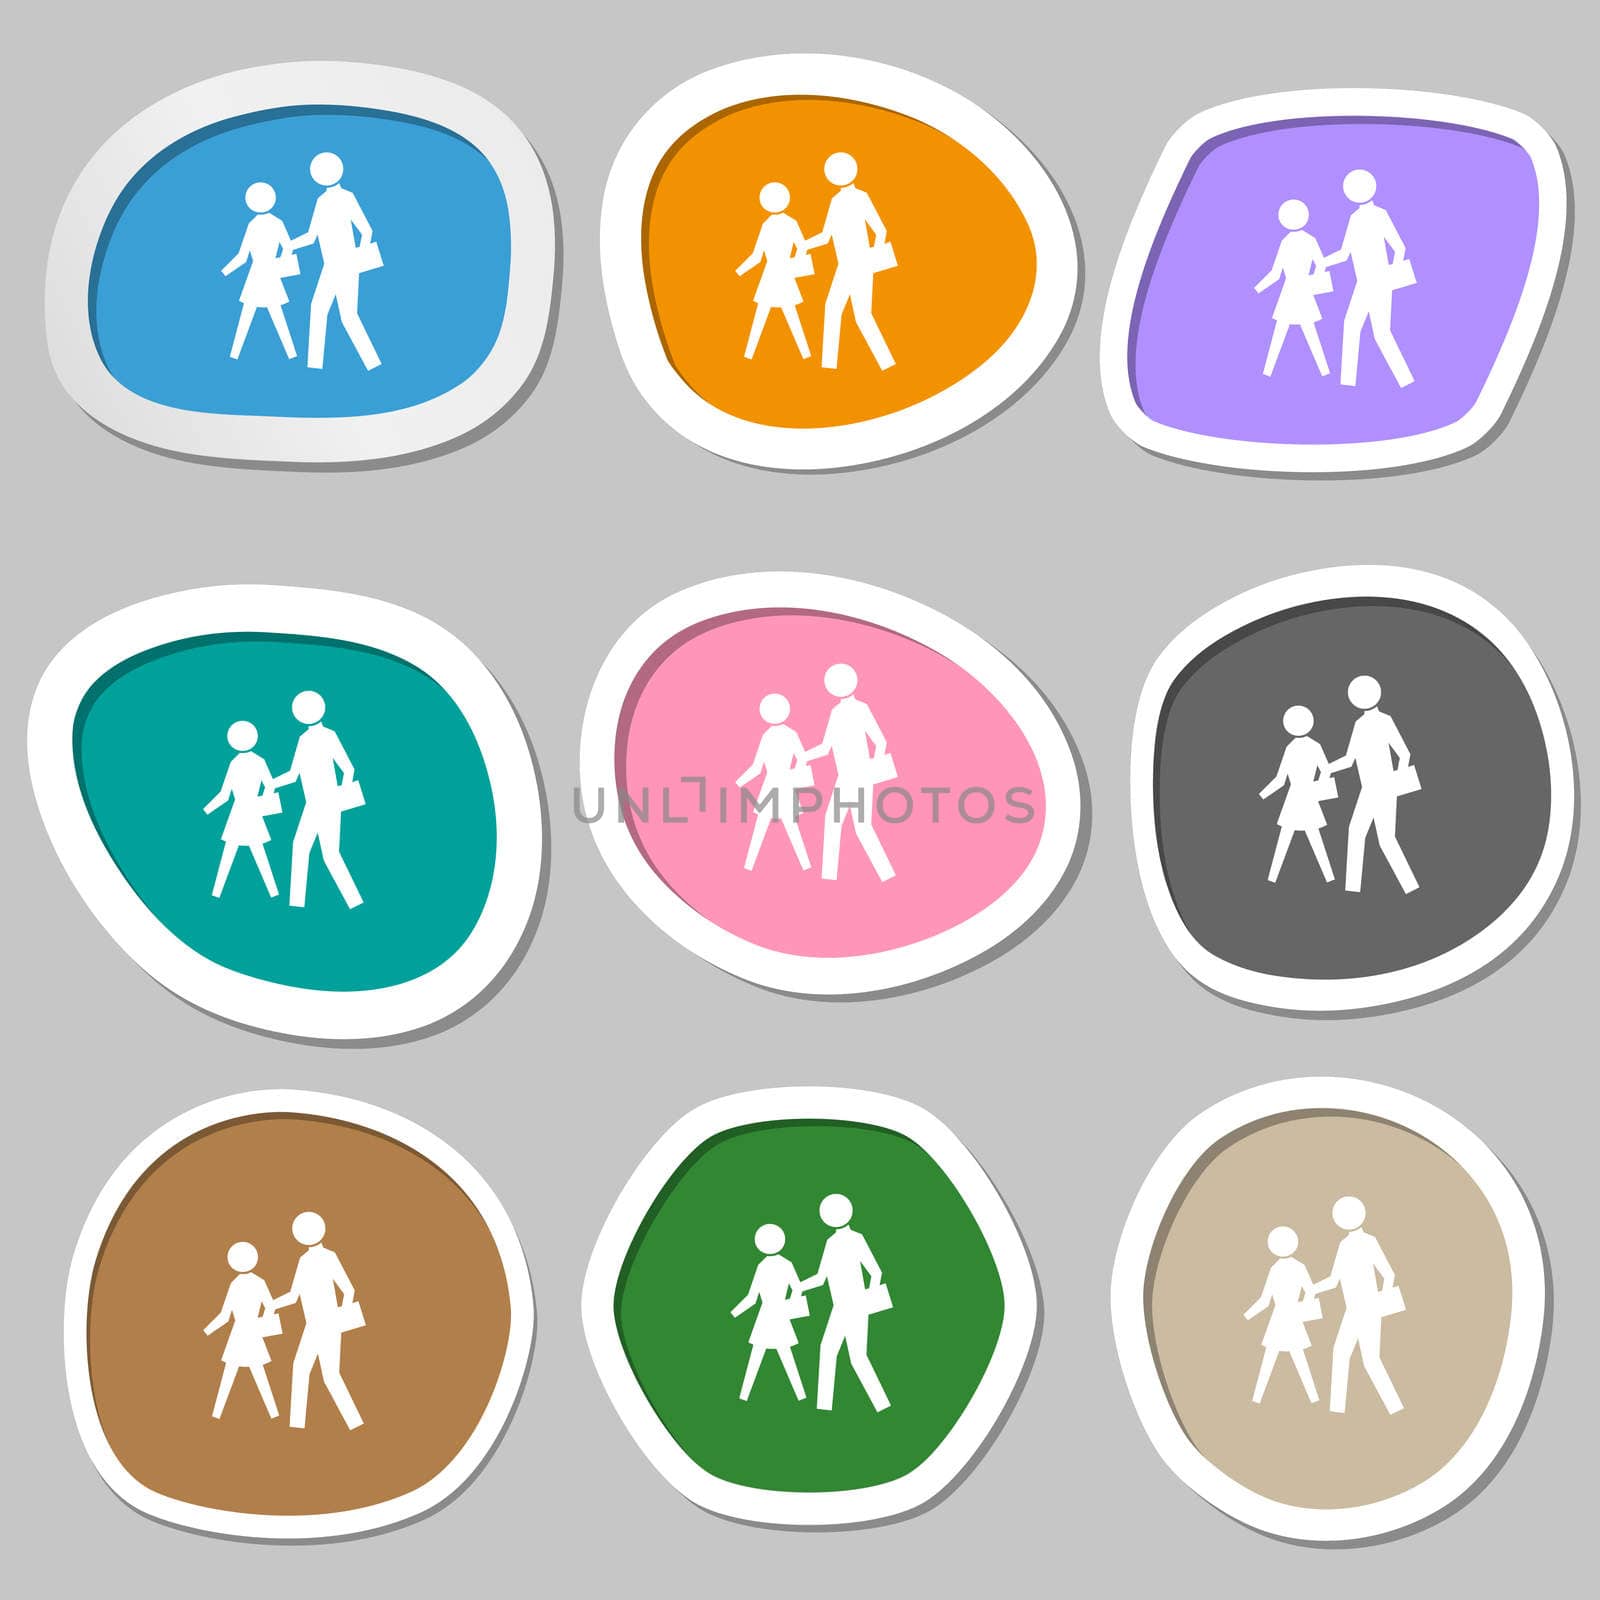 crosswalk icon symbols. Multicolored paper stickers.  by serhii_lohvyniuk